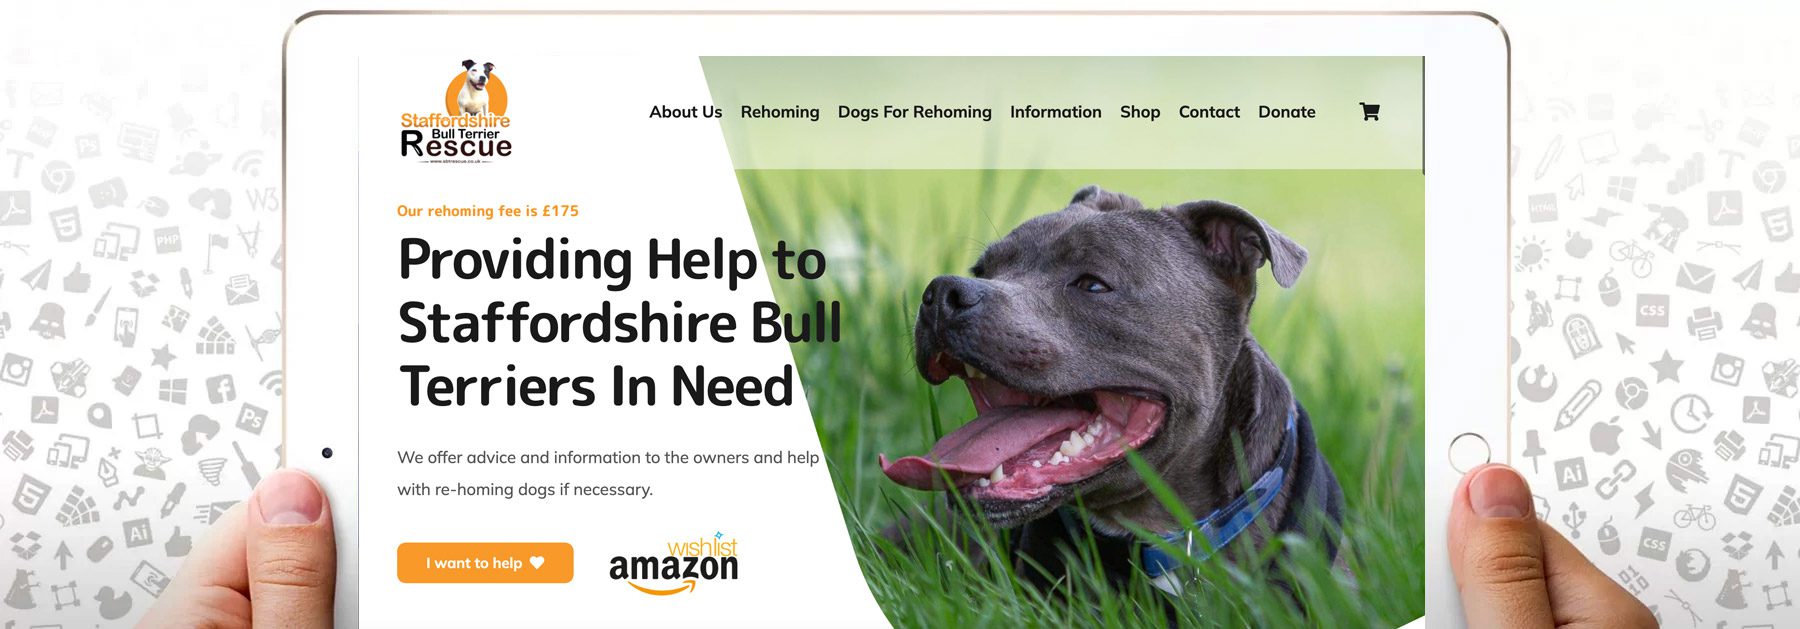 staffy bull terrior dog charity